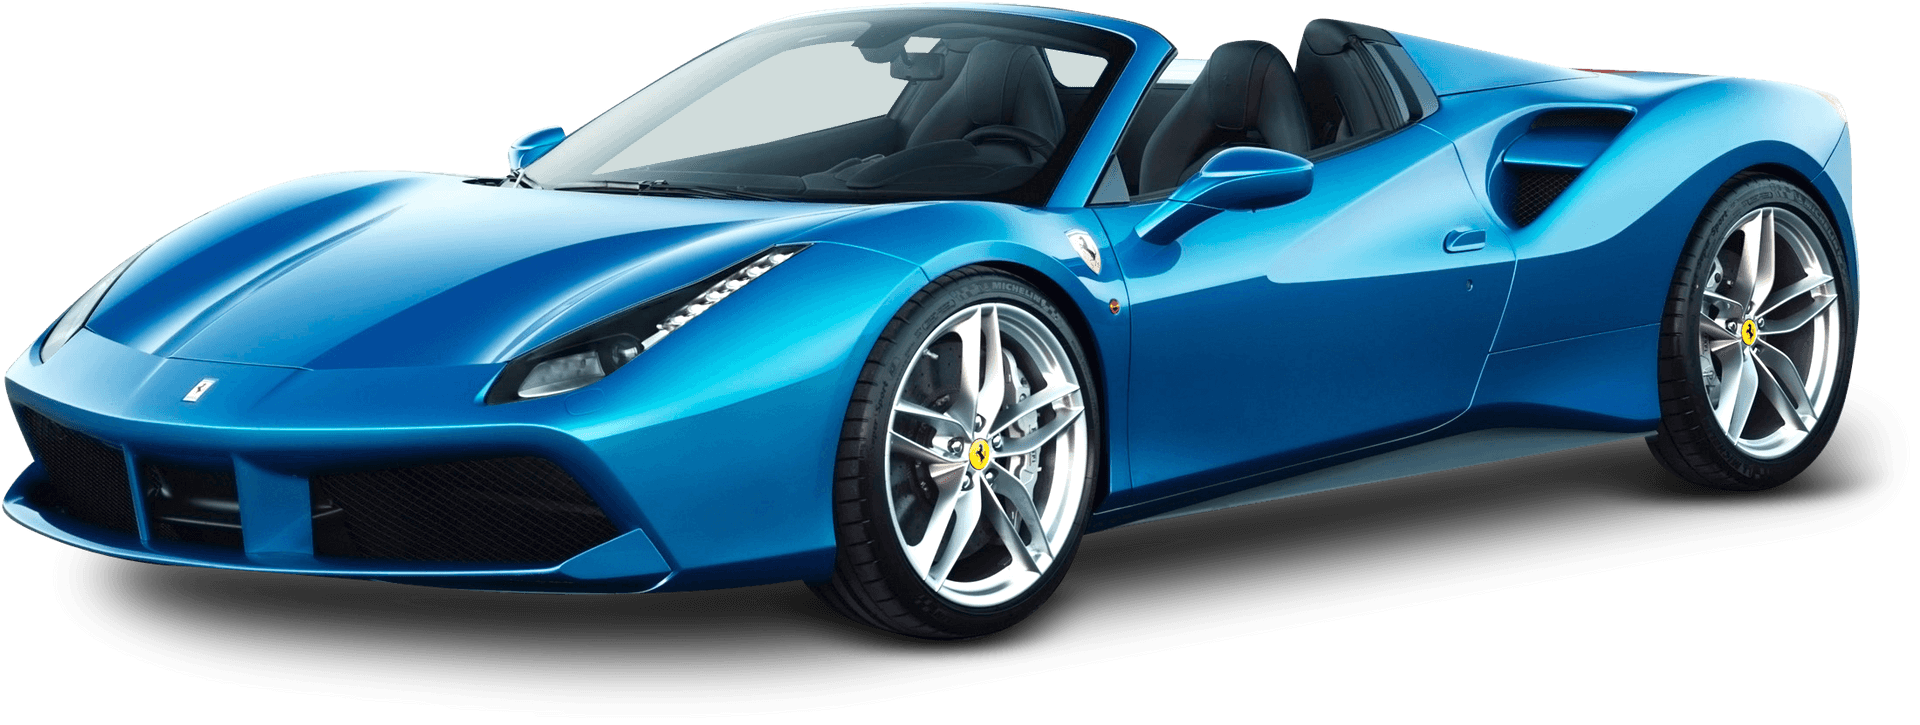 Blue Ferrari Sports Car Profile PNG image